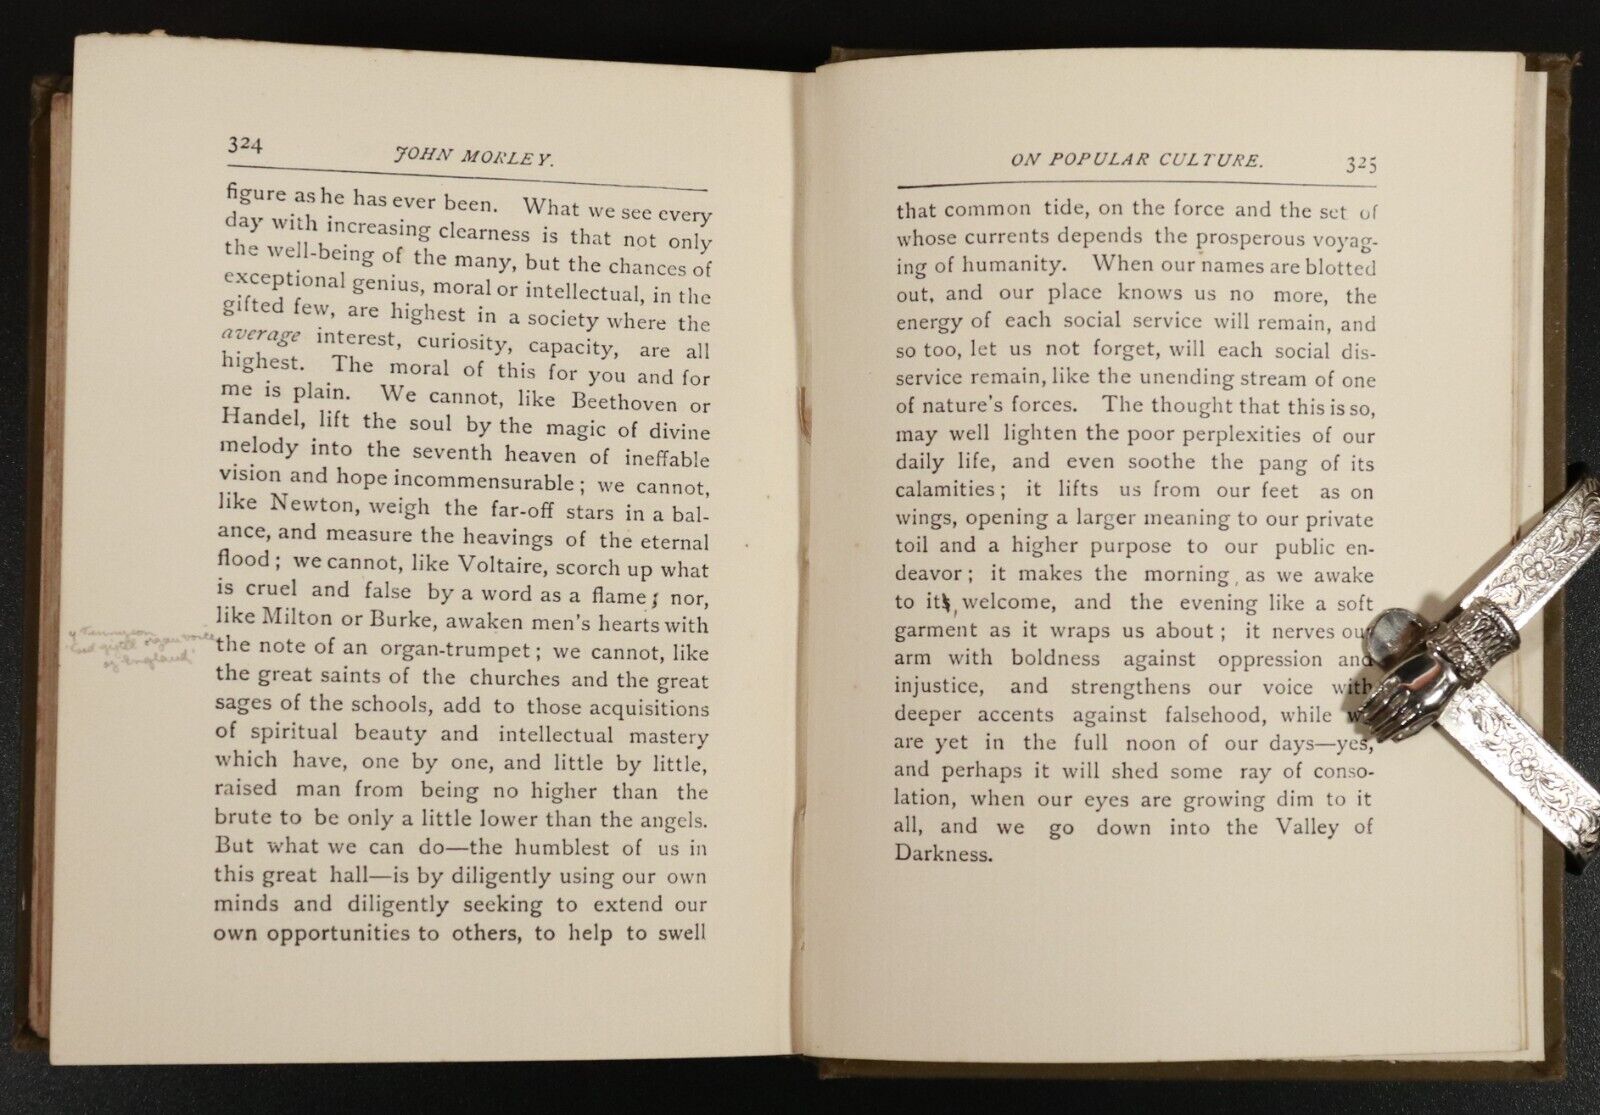 1893 3vol Prose Masterpieces From Modern Essayists Antique Literature Book Set